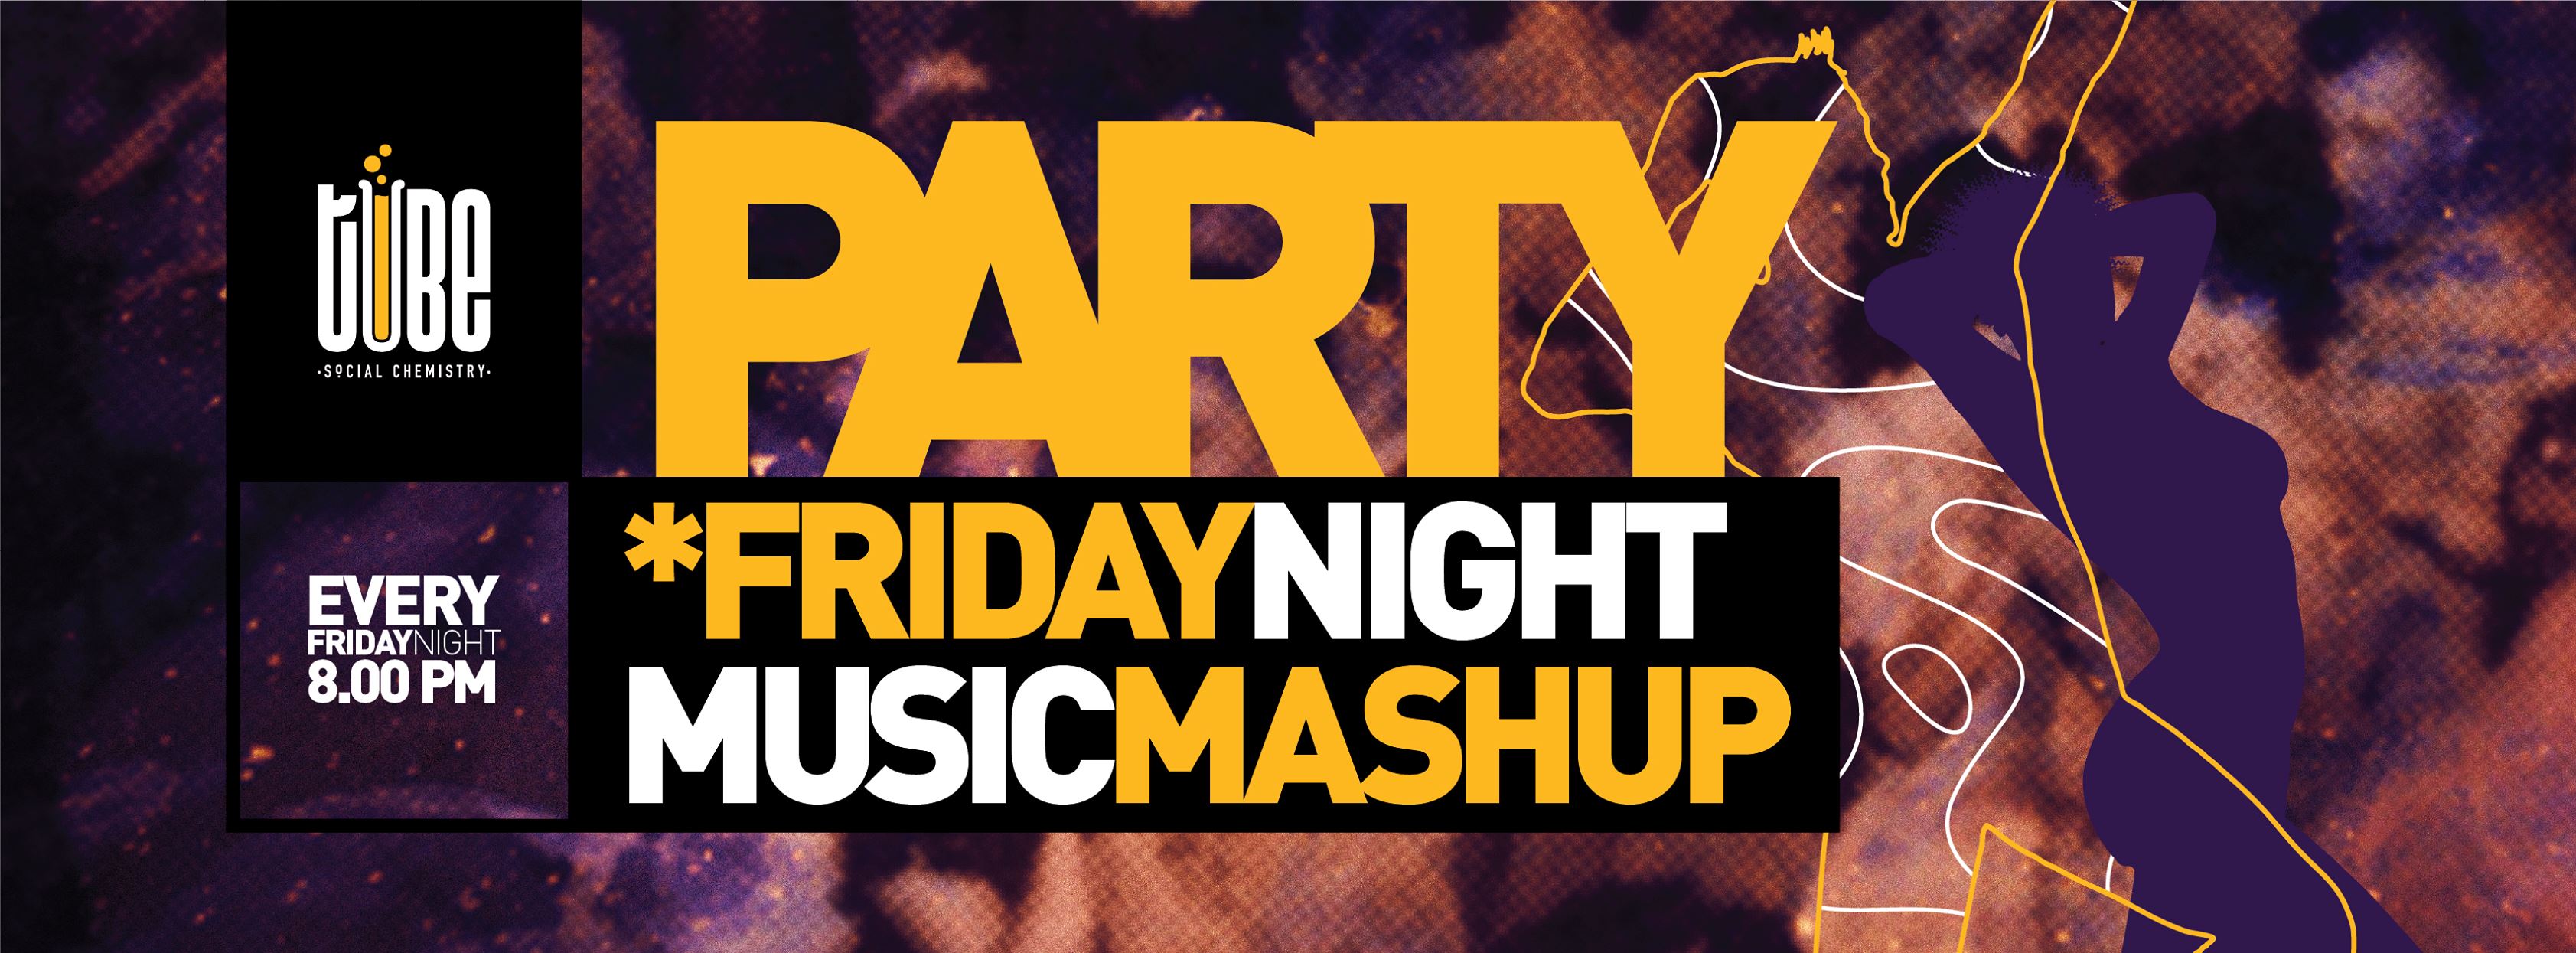 Friday Night Music Mashup @ Tube – Social Chemistry Bar